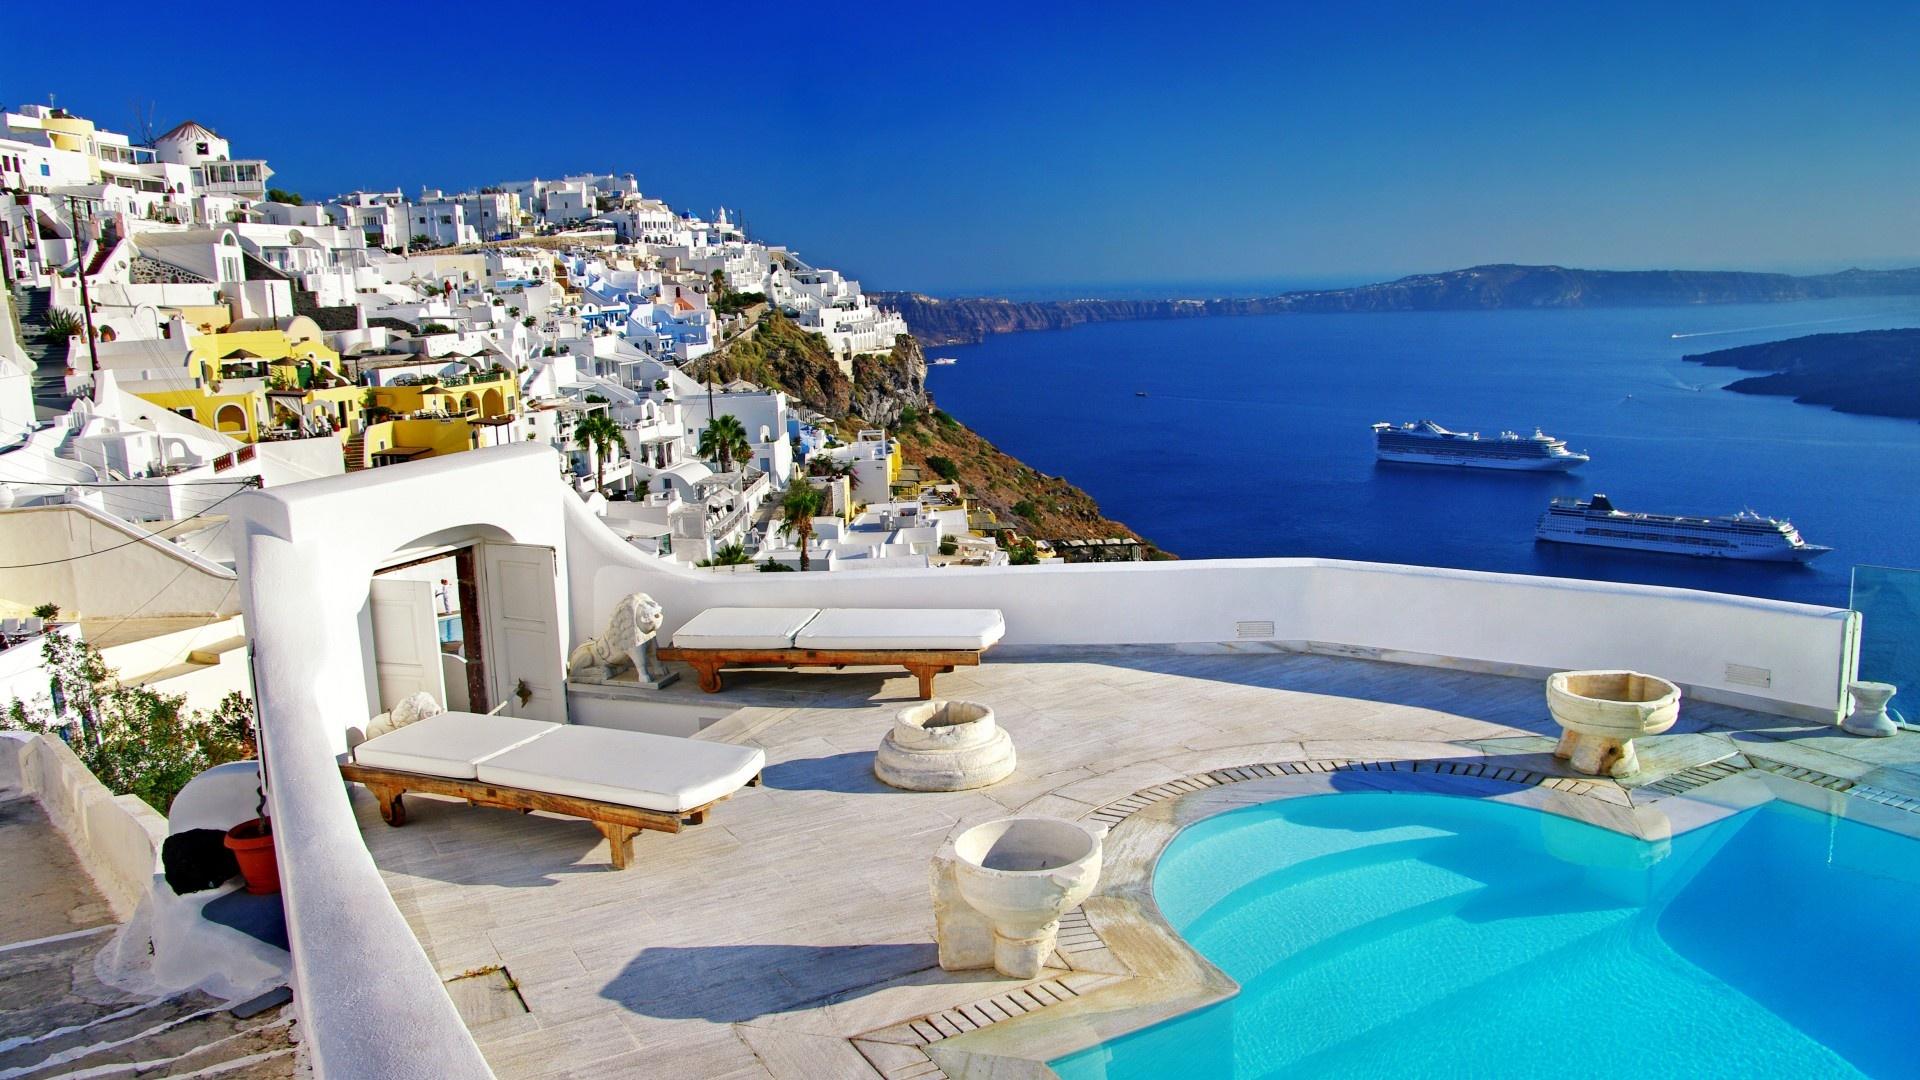 Santorini Luxury Hotels HD Wallpaper Background Image